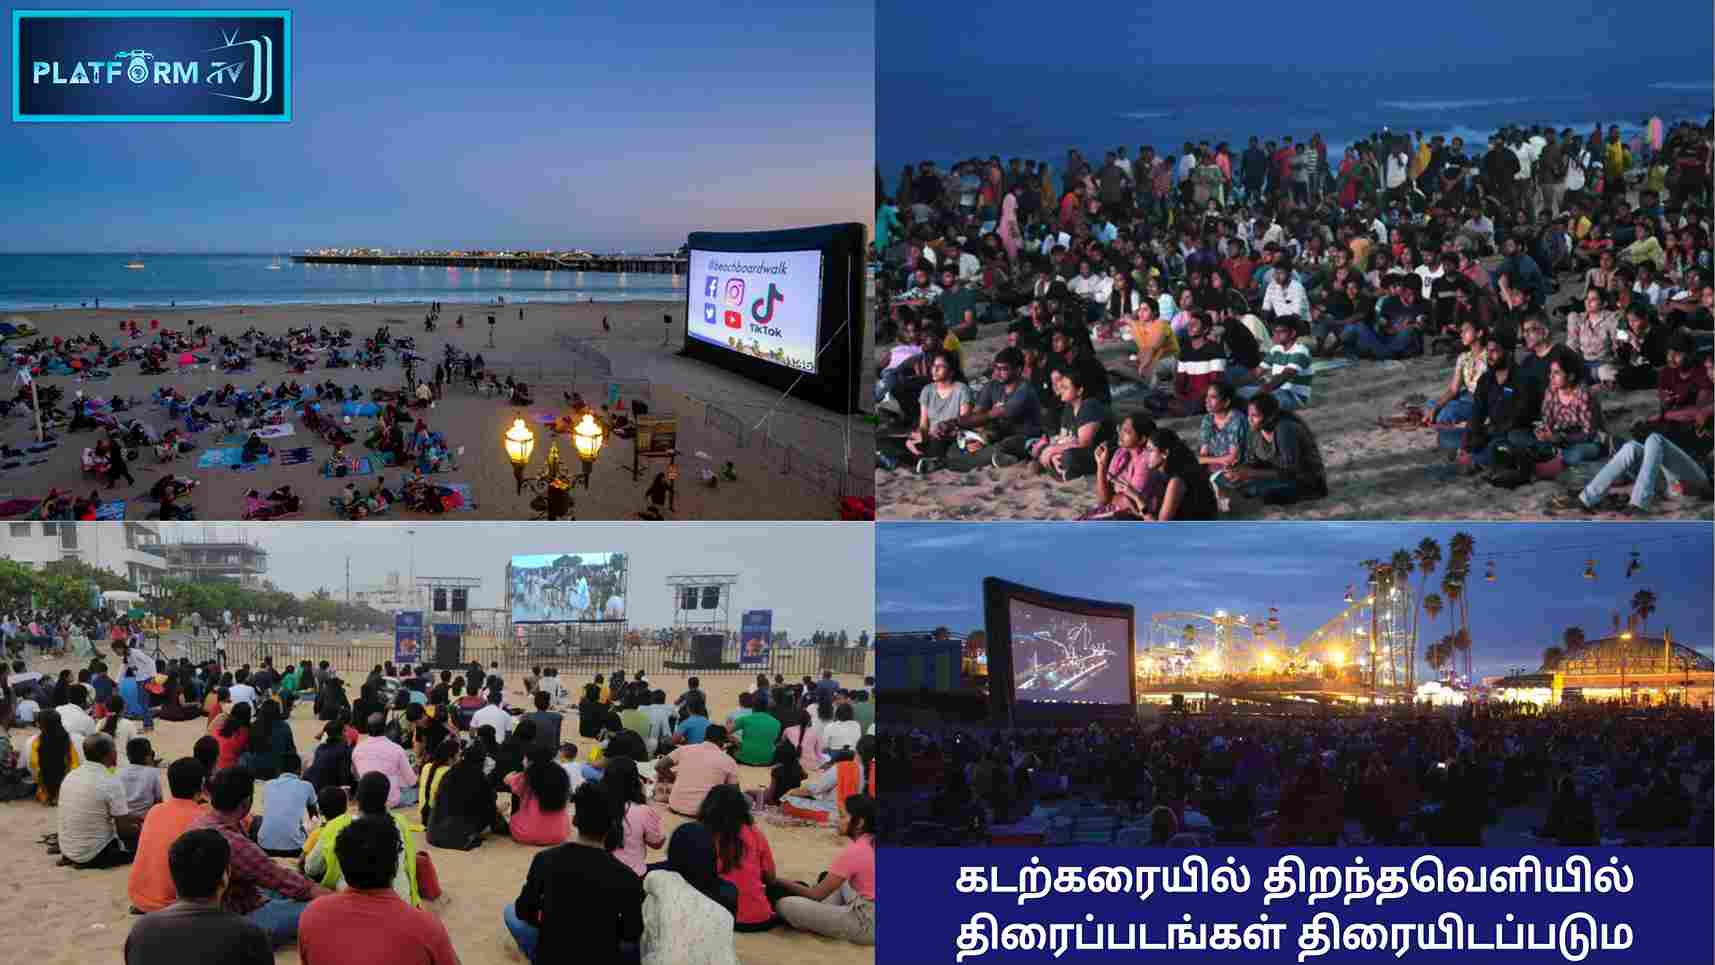 Open Air Theatre - Platform Tamil